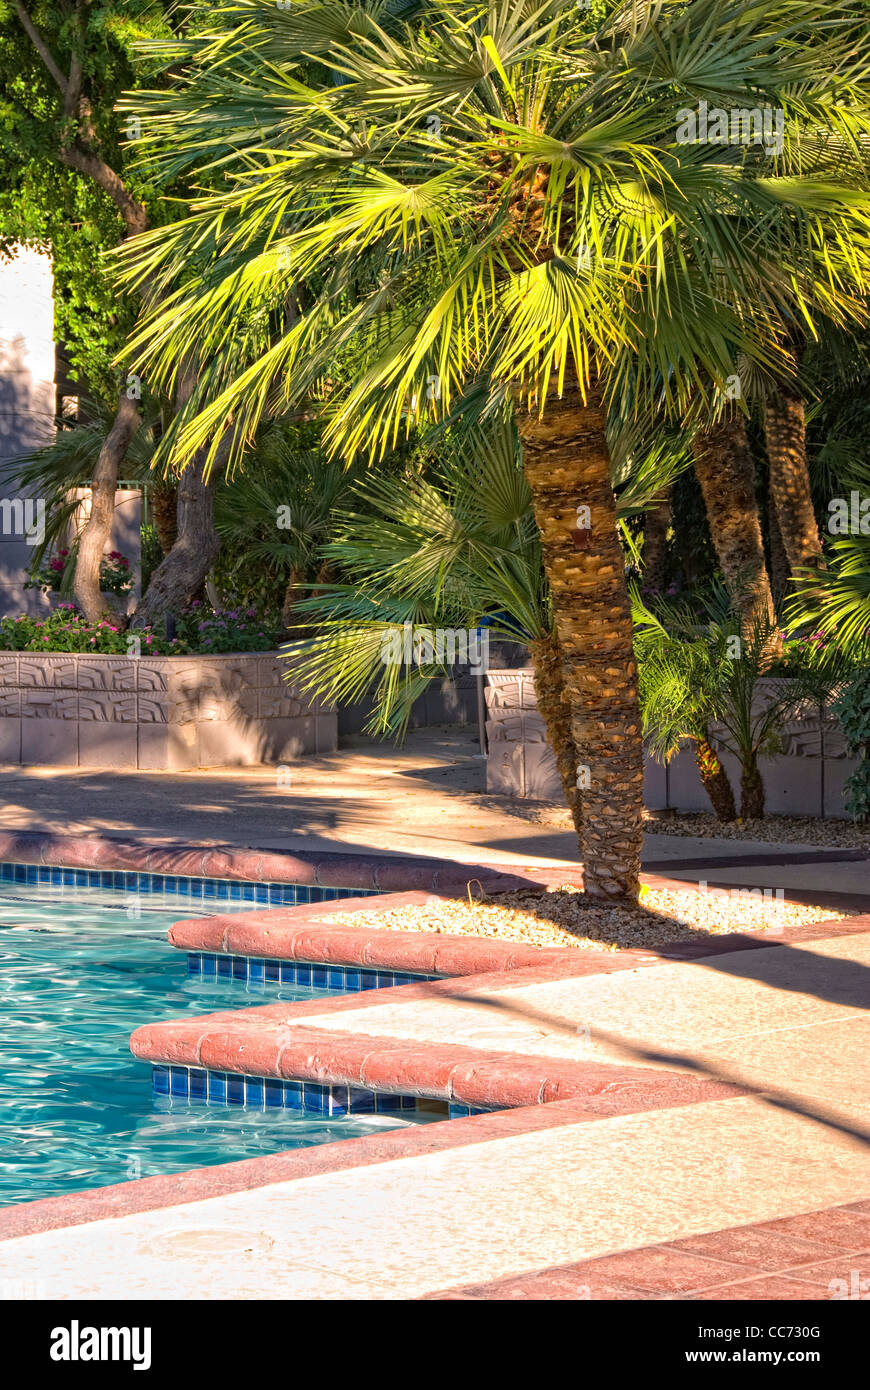 Pool and palm tree at the Biltmore Resort in Phoenix, Arizona Stock Photo